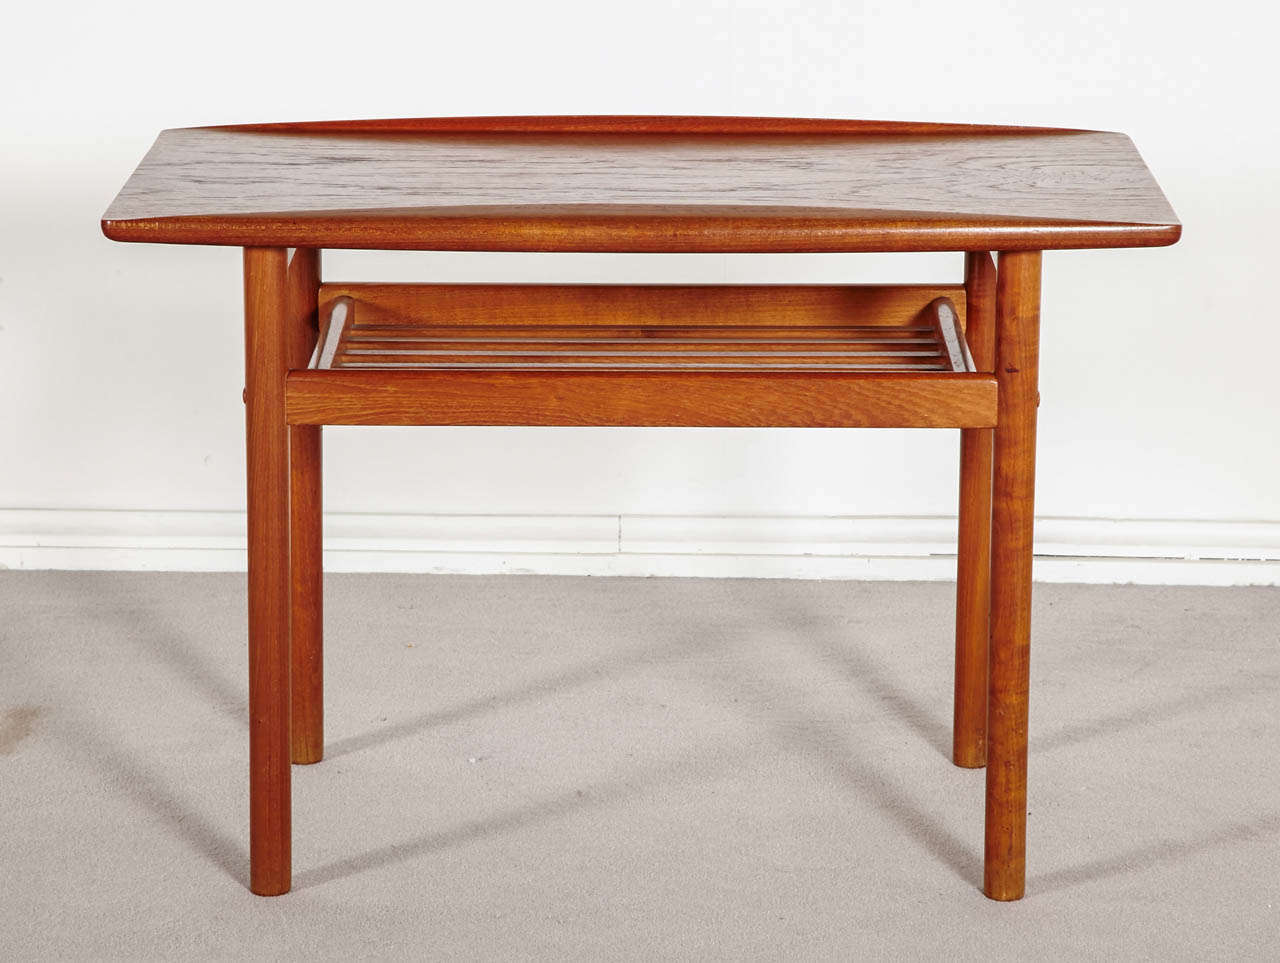 1960's teak wood Danish design coffee table by Grete Jalk (1920-2006 ).